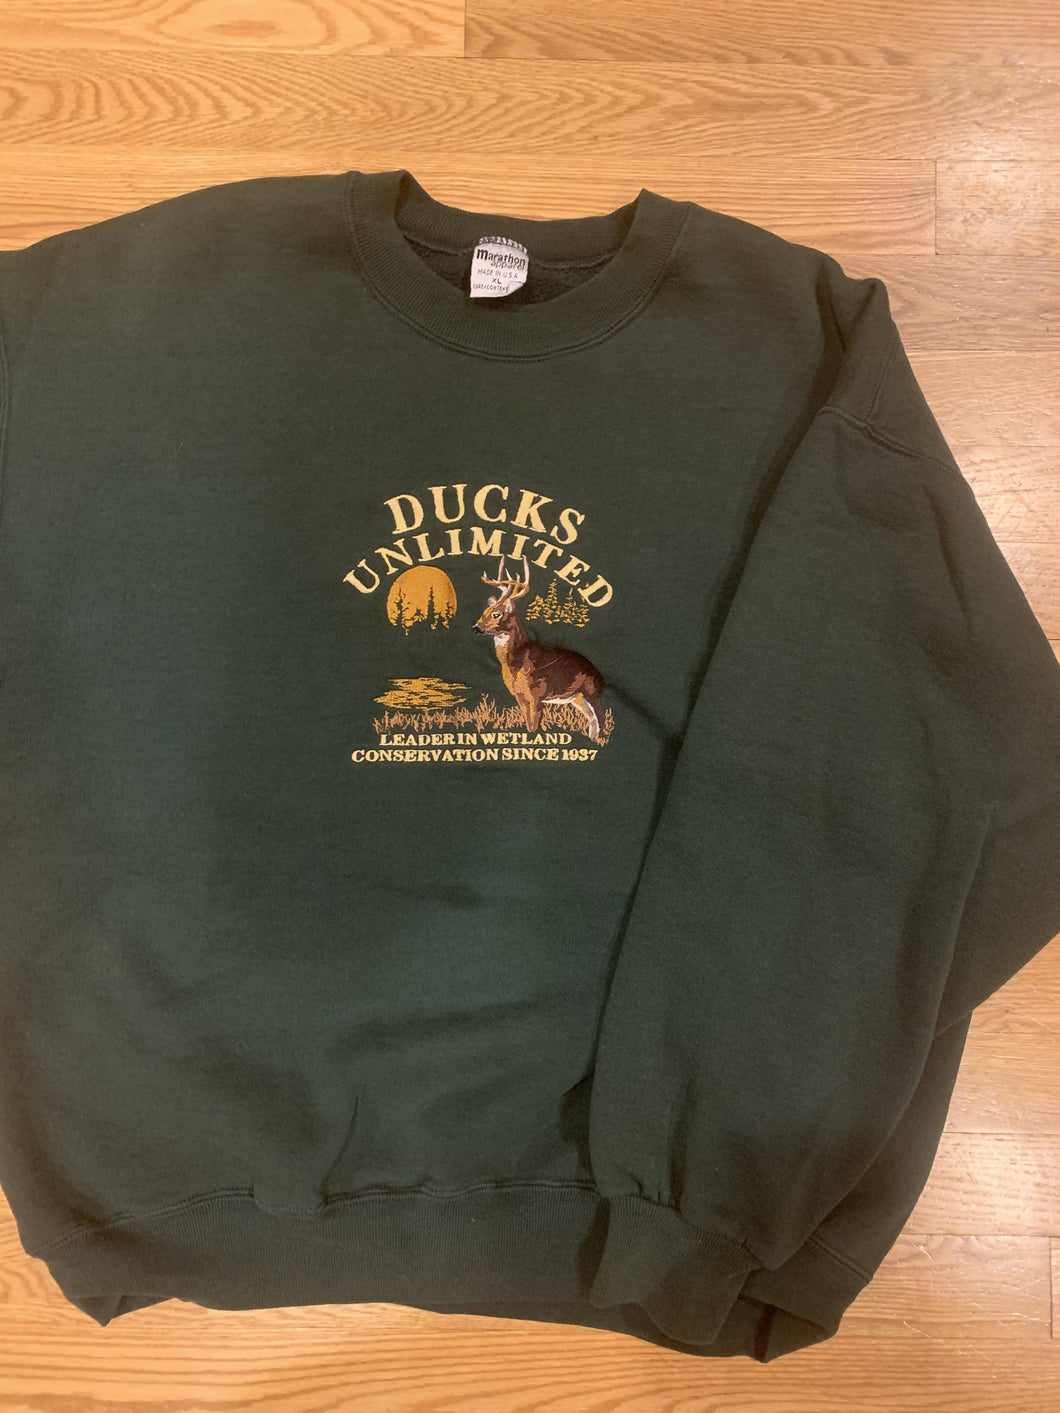 Ducks Unlimited Crew Neck Sweater (XL)